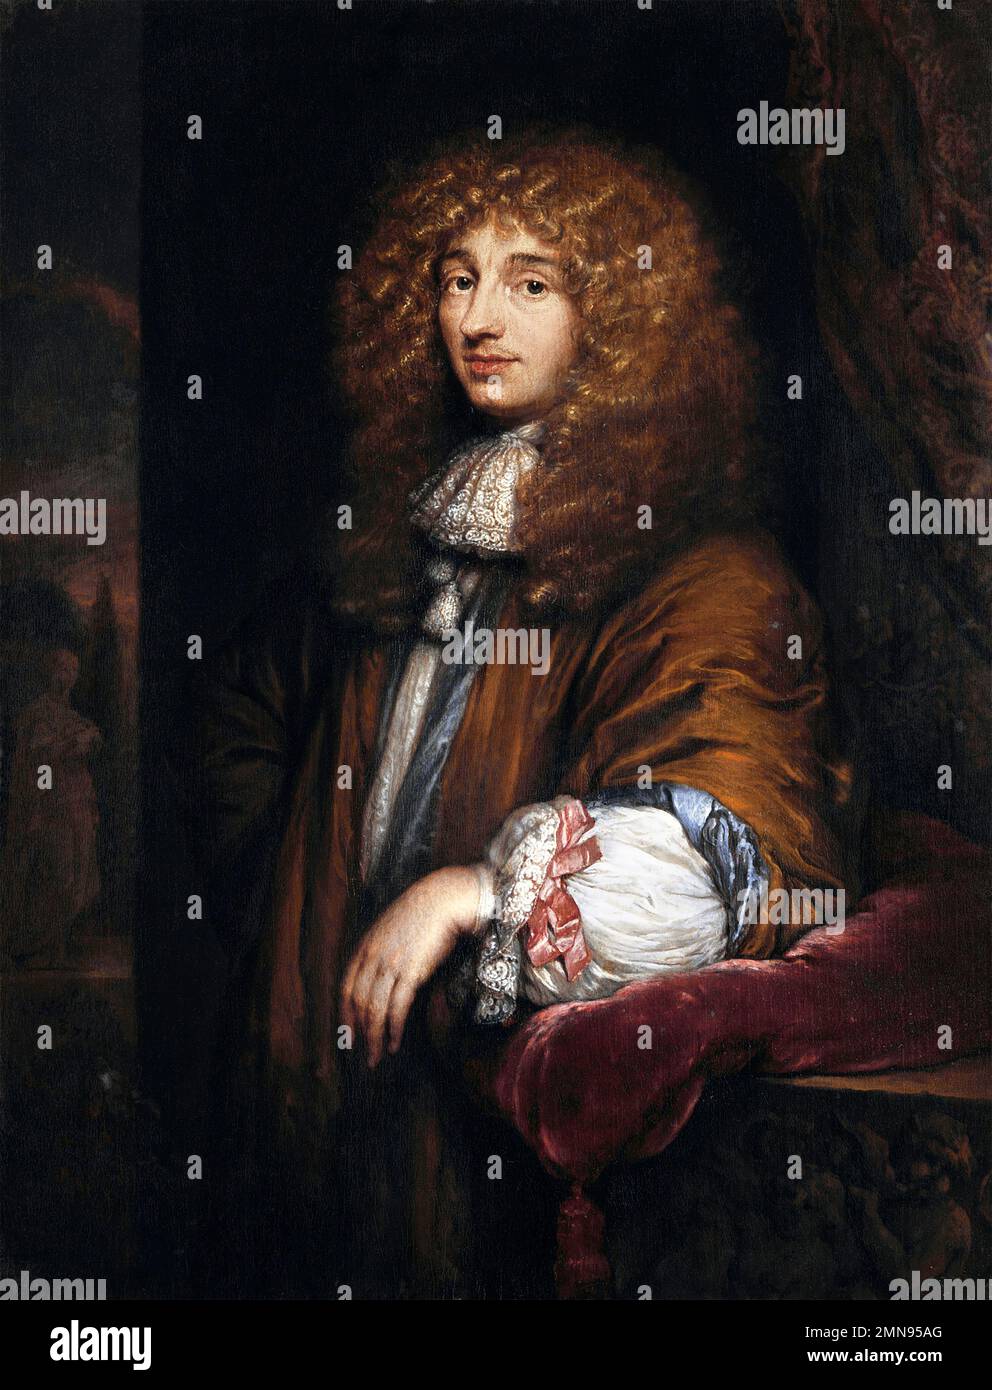 Christiaan Huygens. Ritratto del matematico, fisico e astronomo olandese Christiaan Huygens (1629-1695), dipinto di Caspar Netscher, 1671 Foto Stock